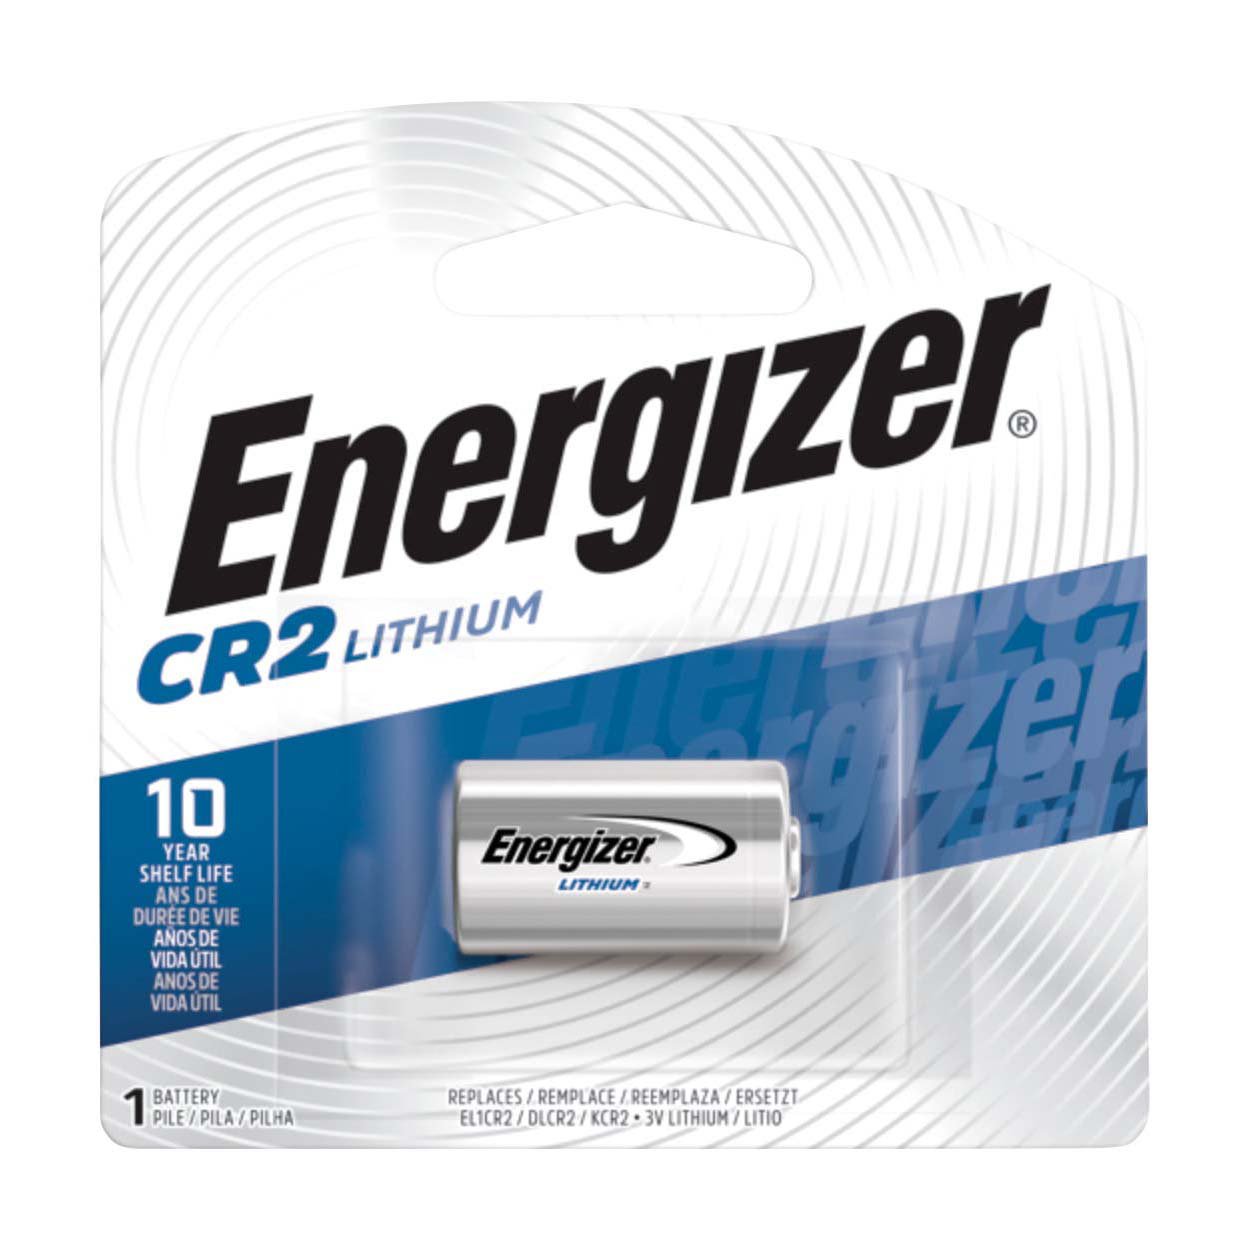 Energizer CR2016 Lithium Coin Batteries - Shop Batteries at H-E-B